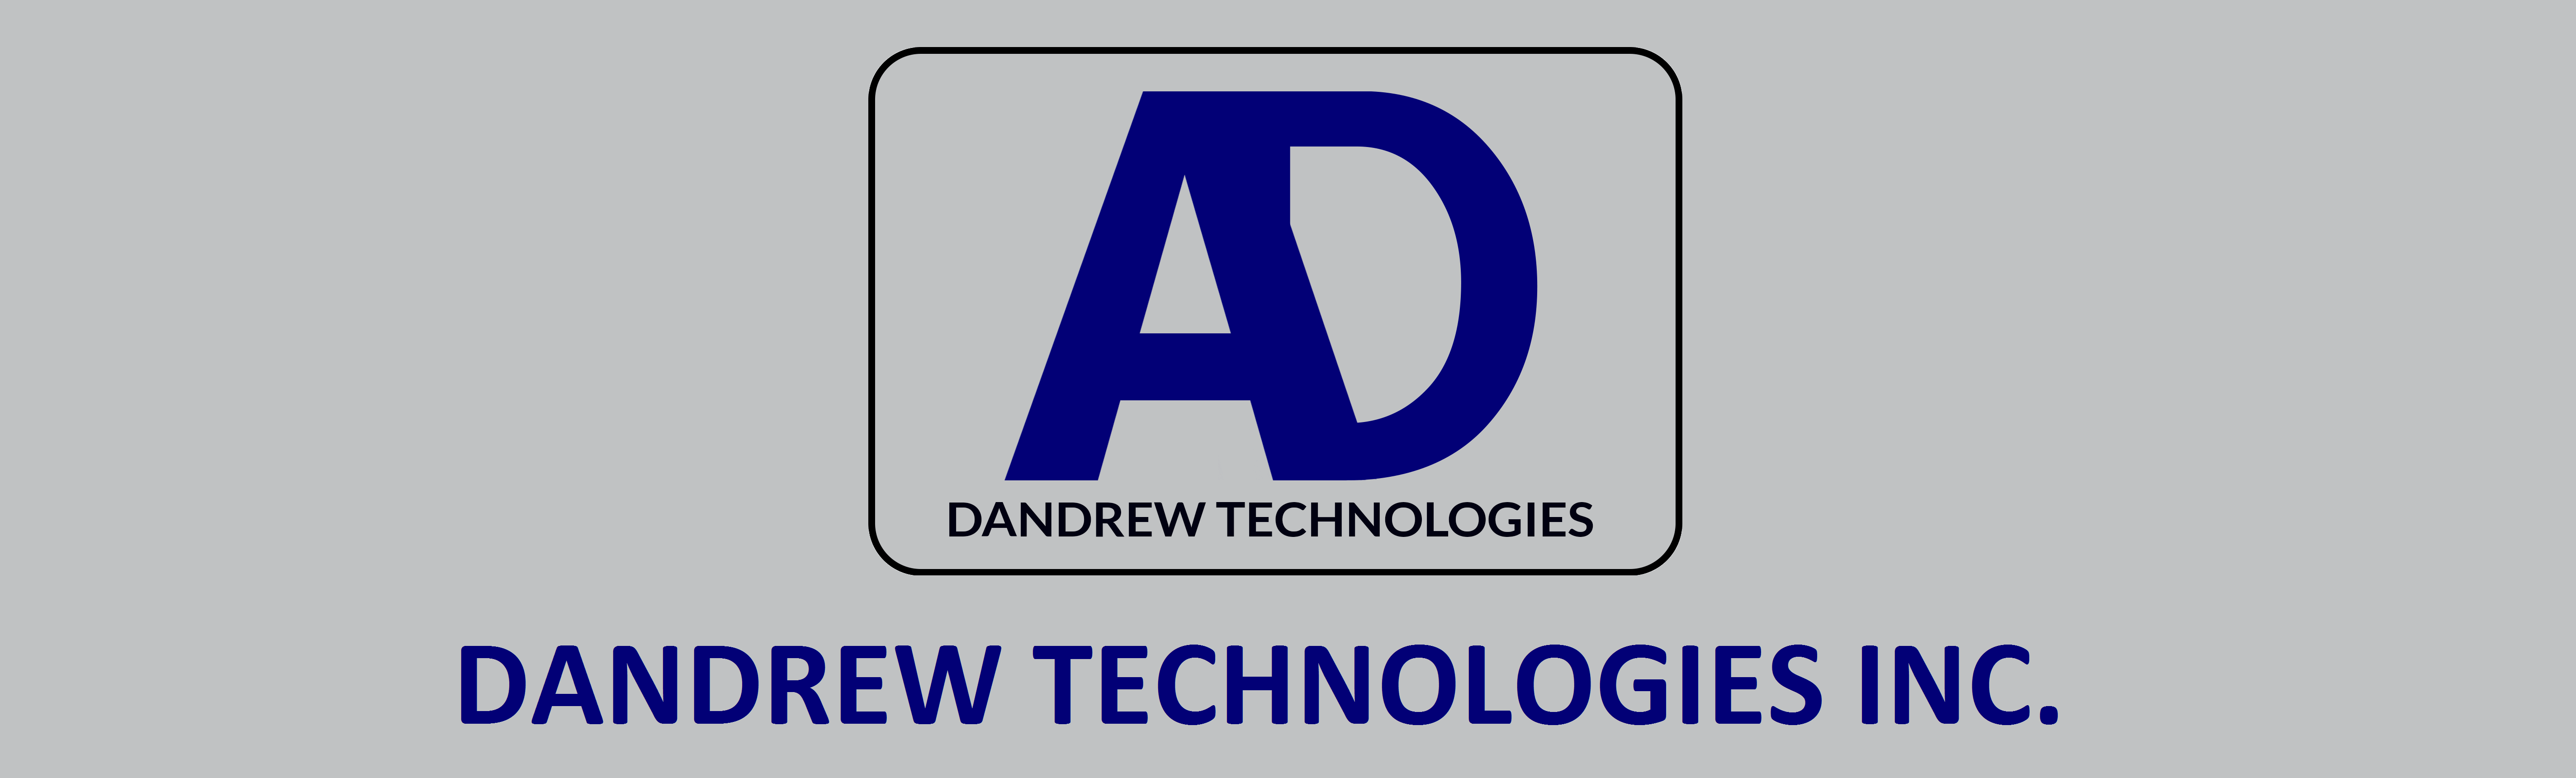 DANDREW TECHNOLOGIES INC.